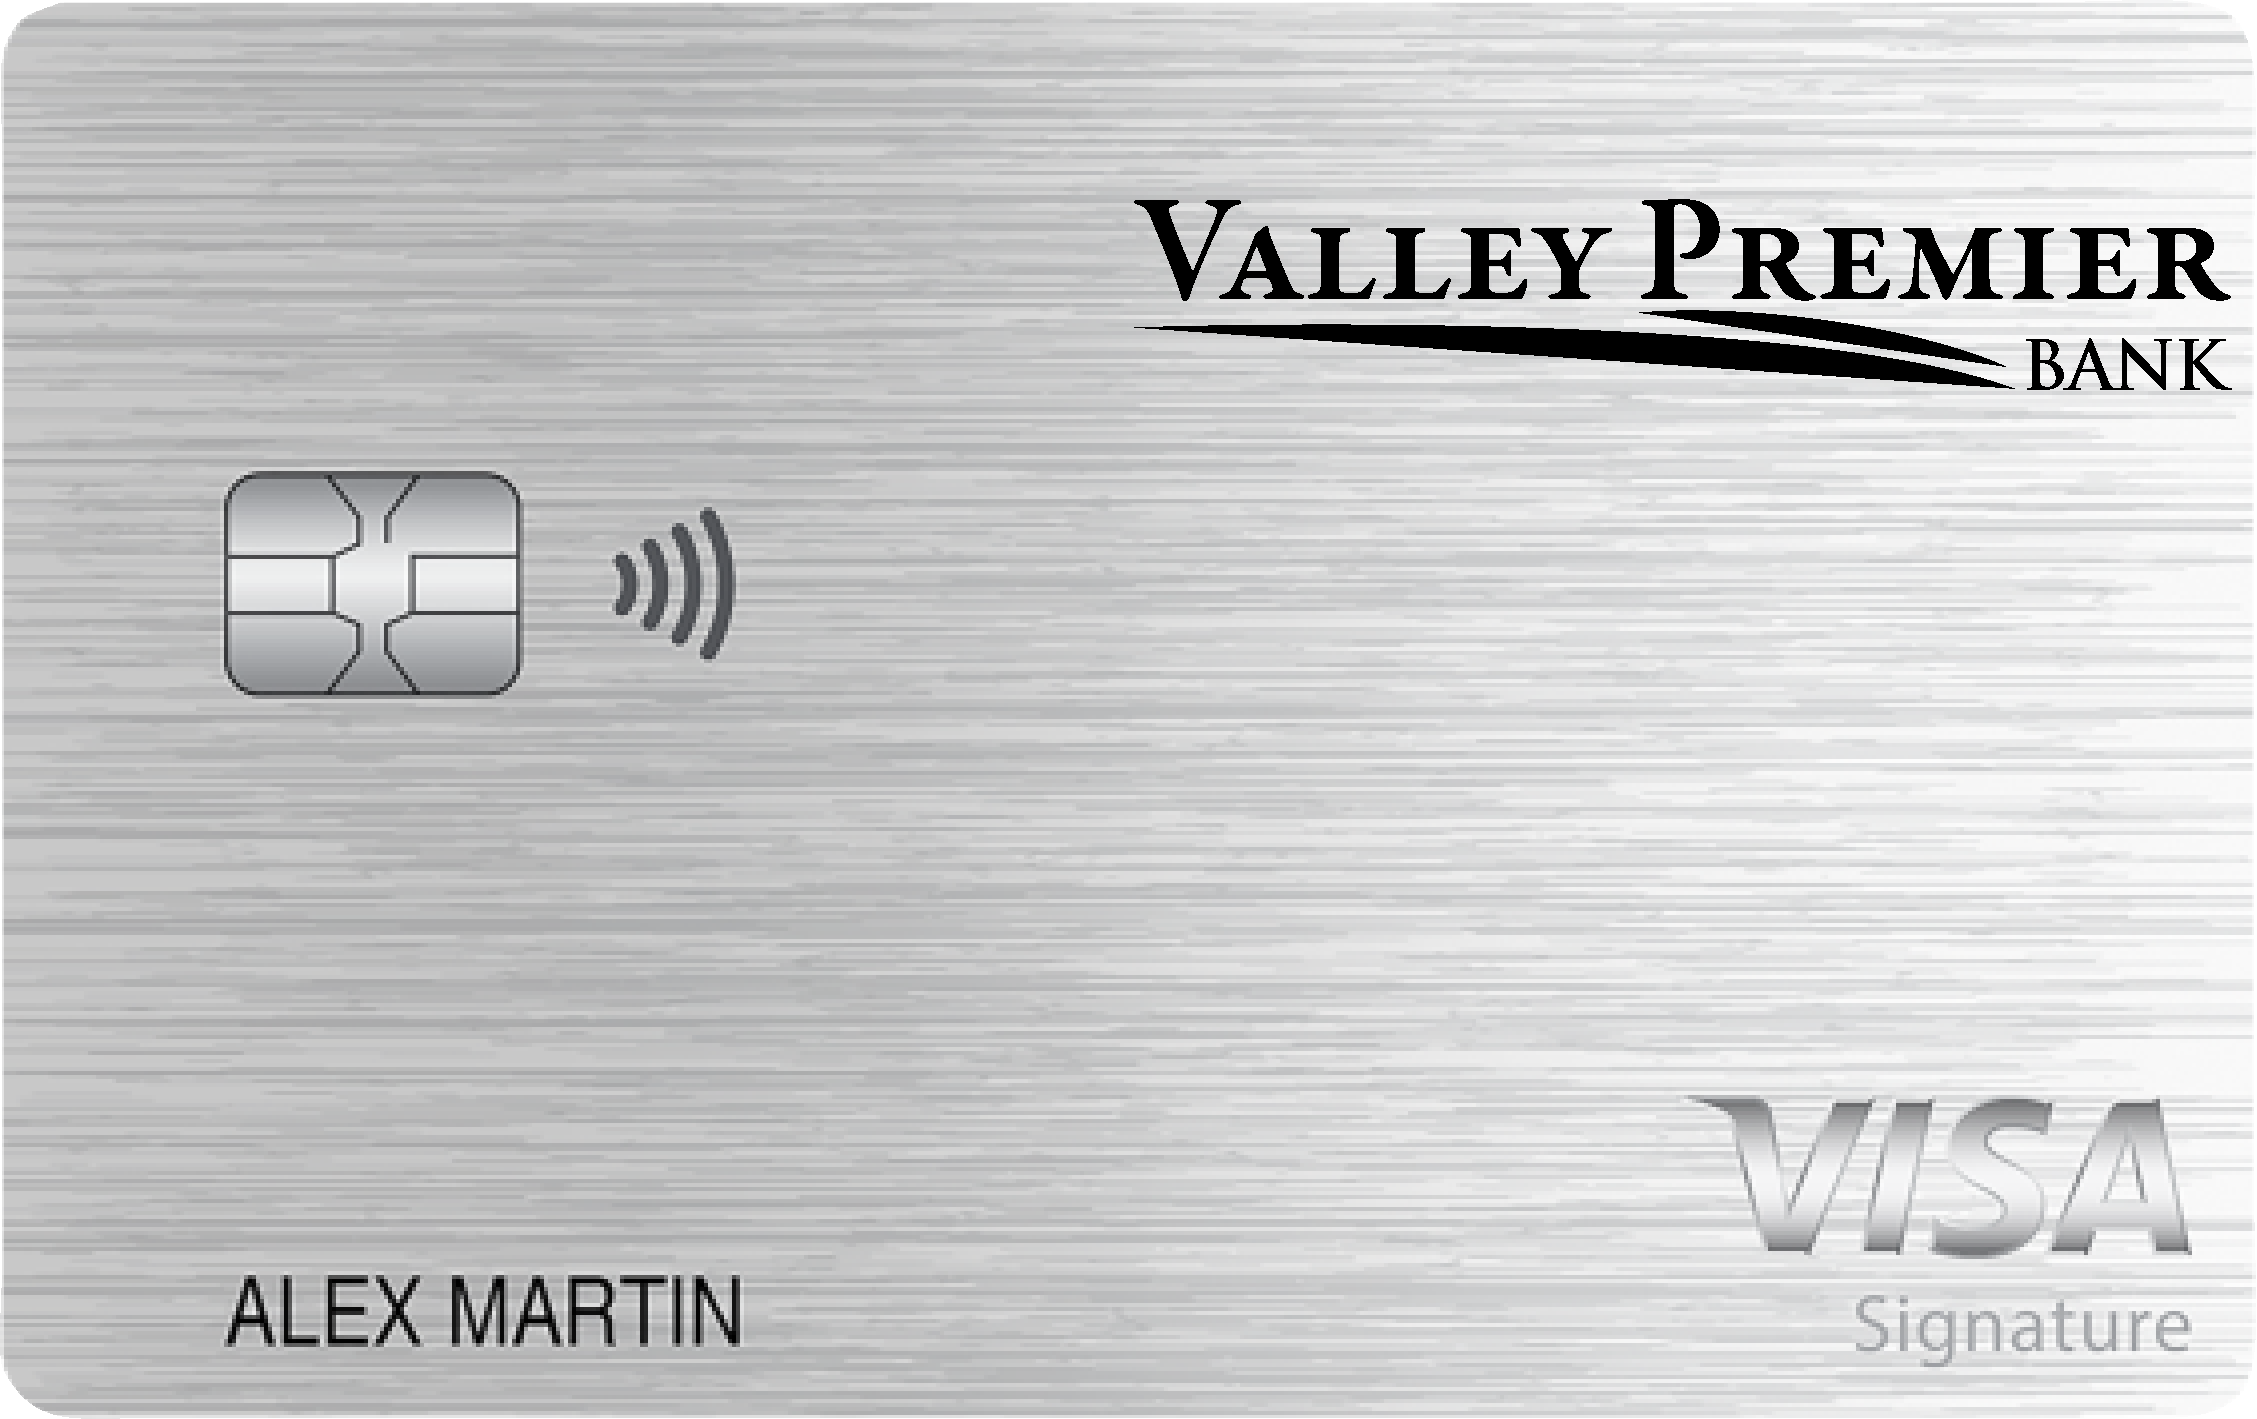 Valley Premier Bank